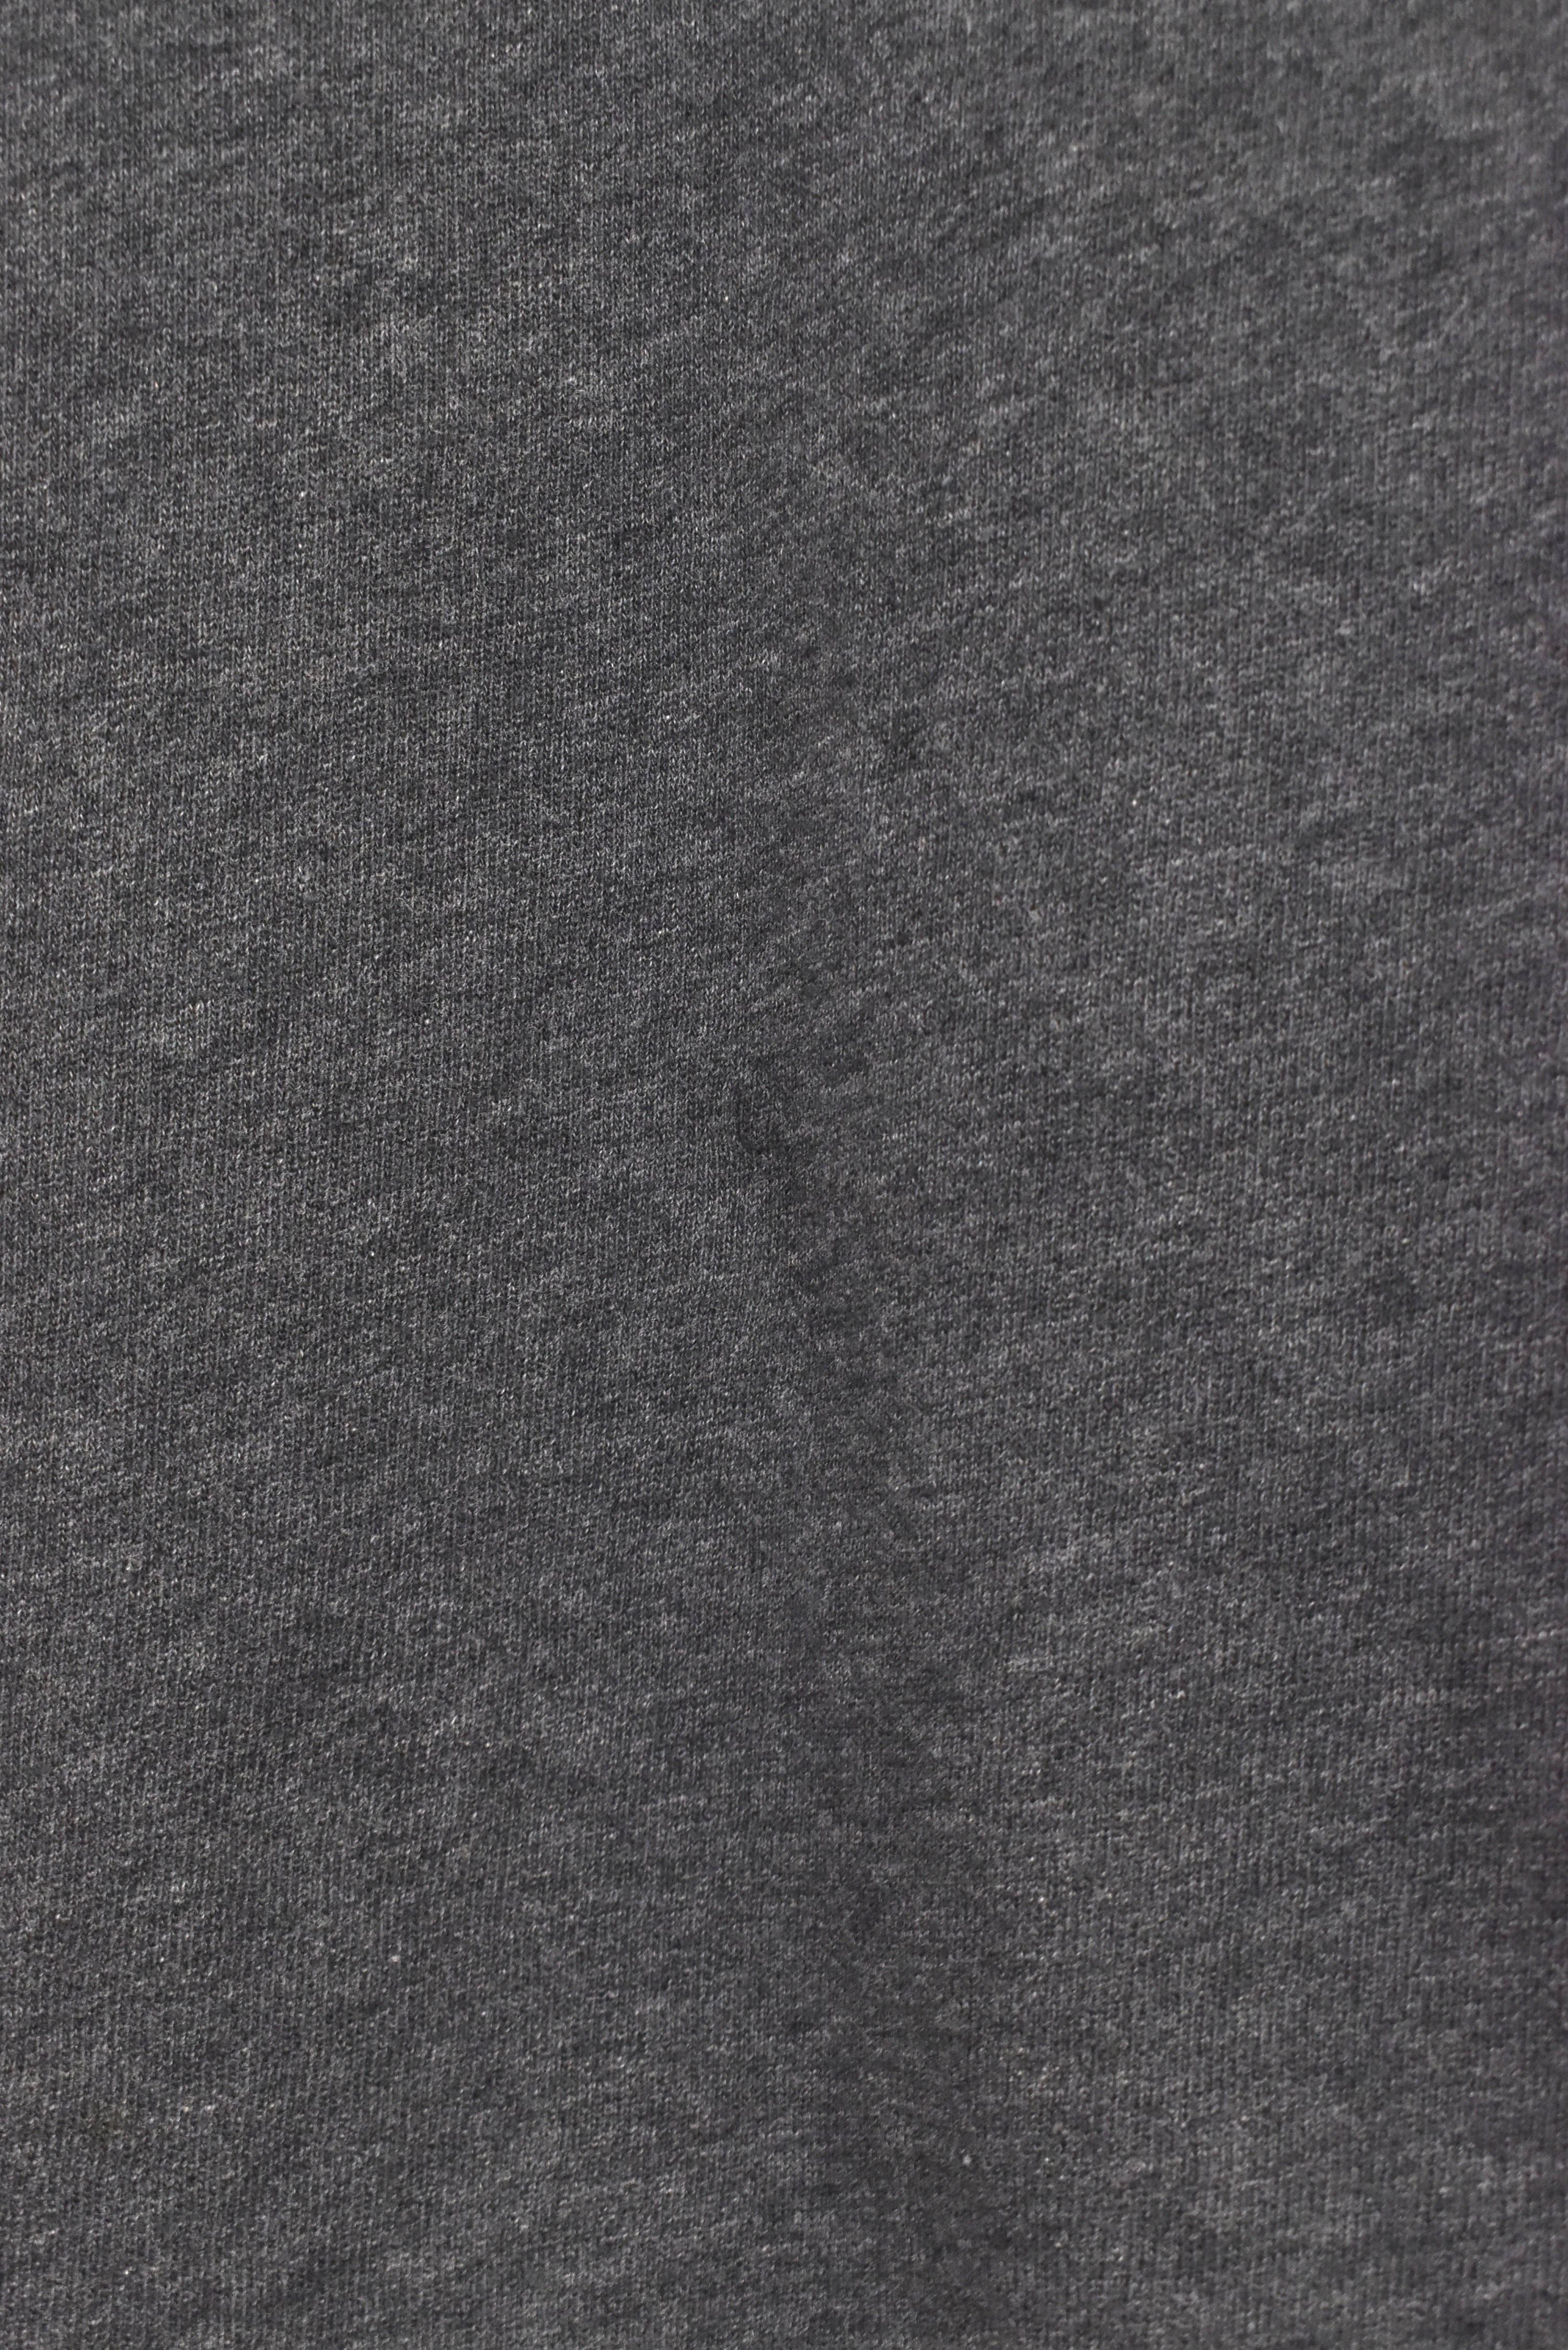 Vintage Fila sweatshirt, grey collared 1/4 zip - AU XL